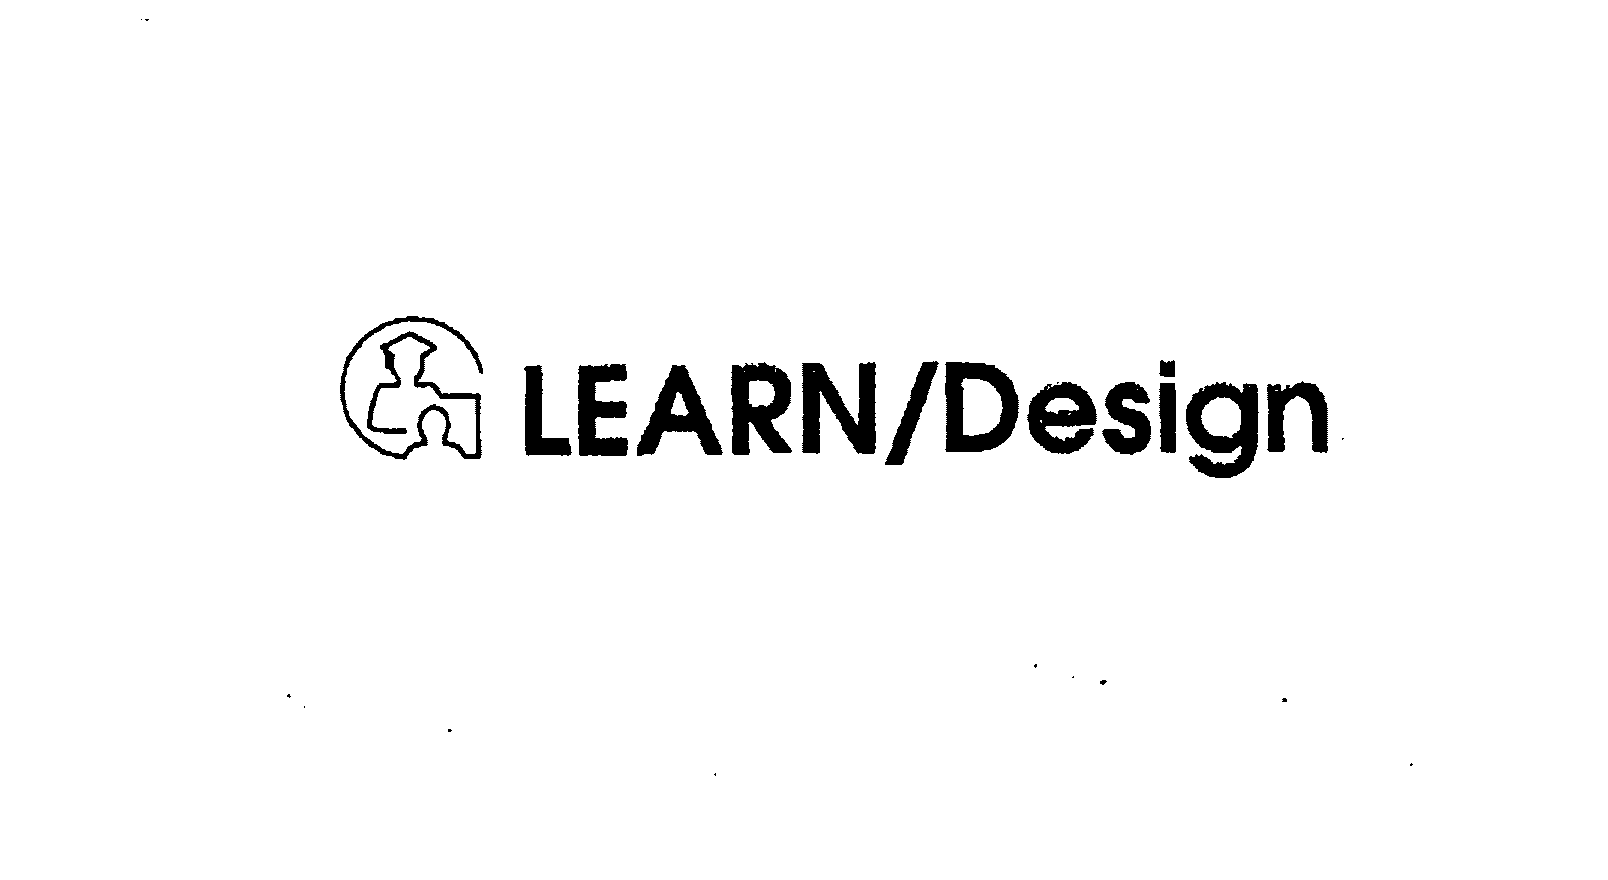  LEARN/DESIGN